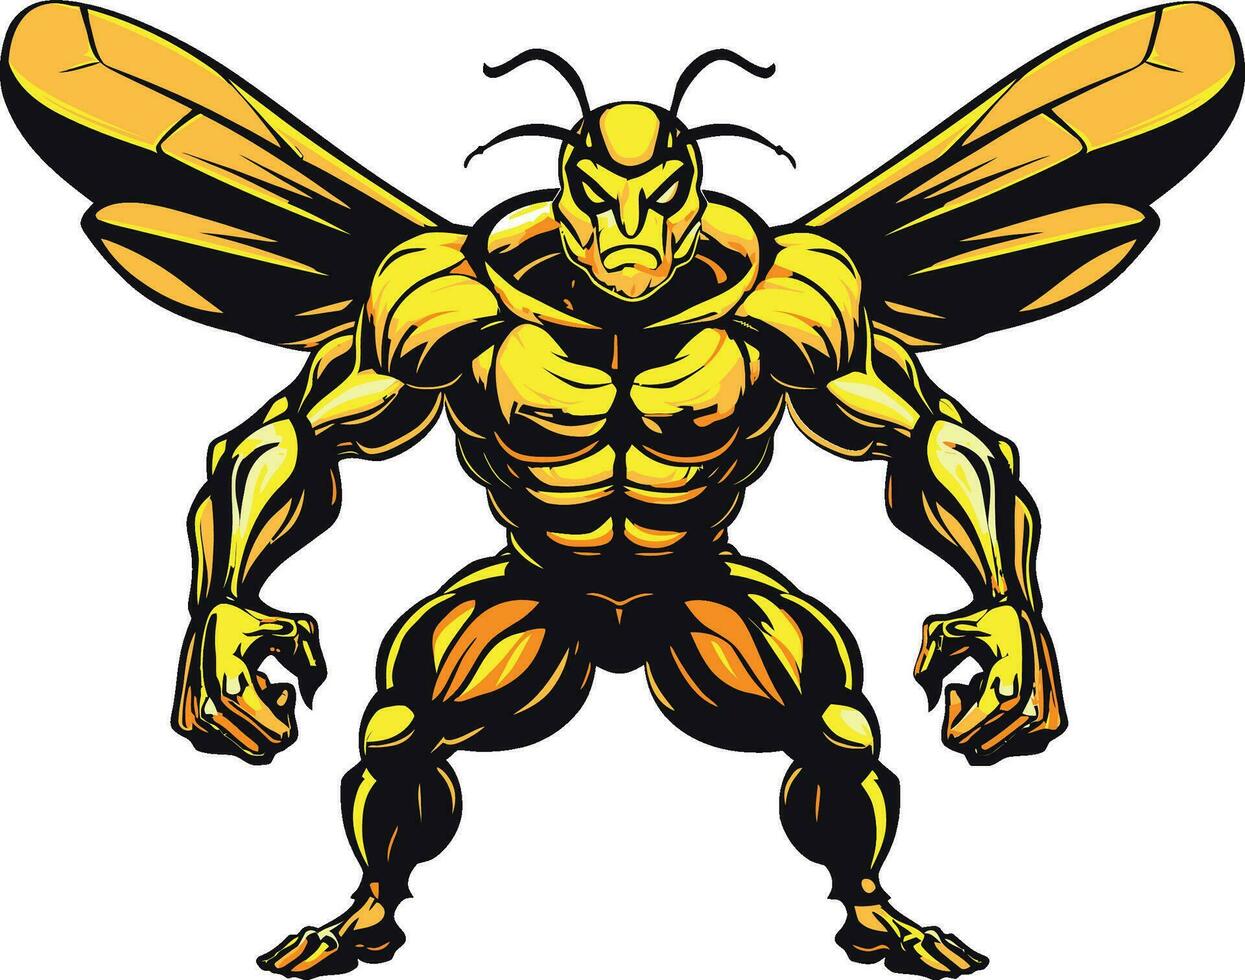 nobre vespa majestade Preto logotipo arte inseto silhueta excelência emblemático ícone vetor